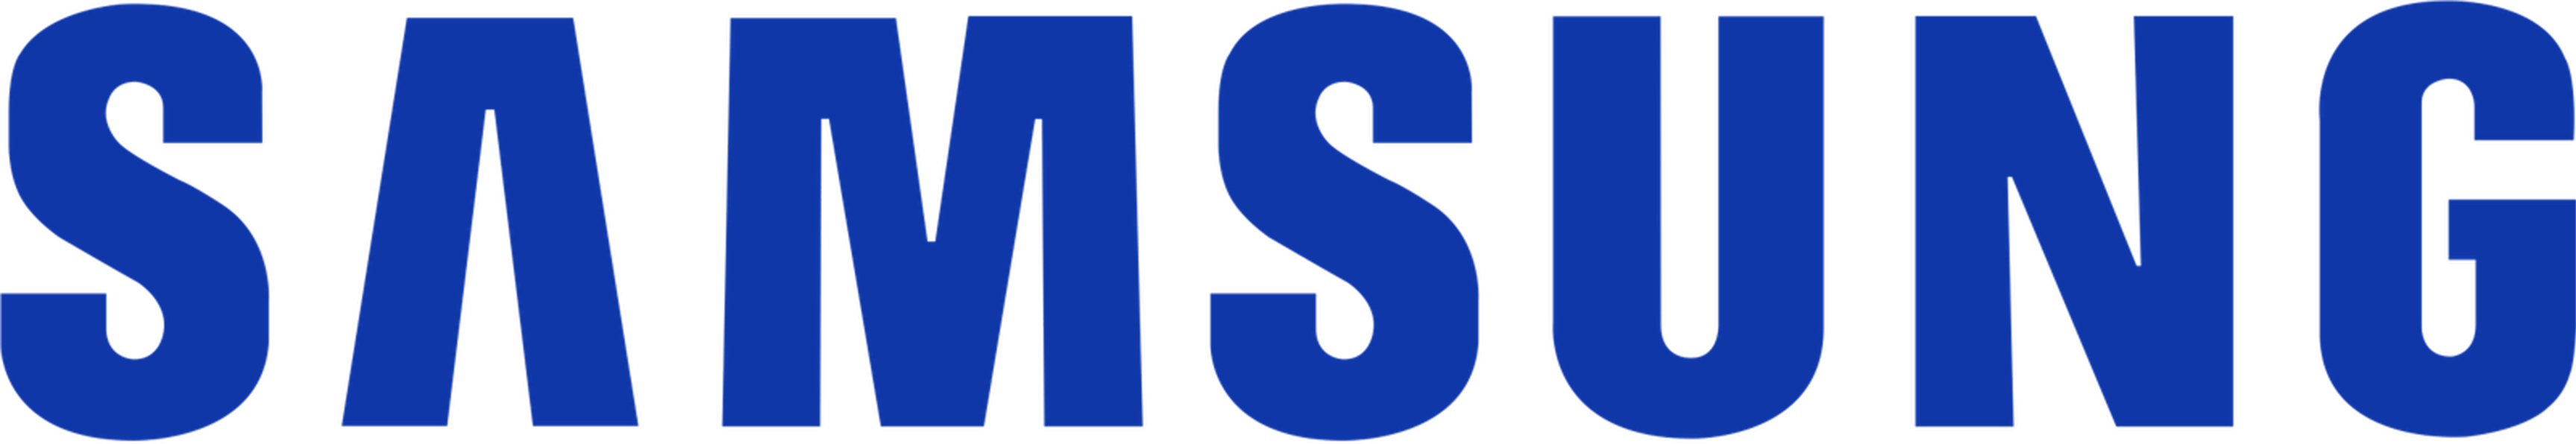 Logo samsung